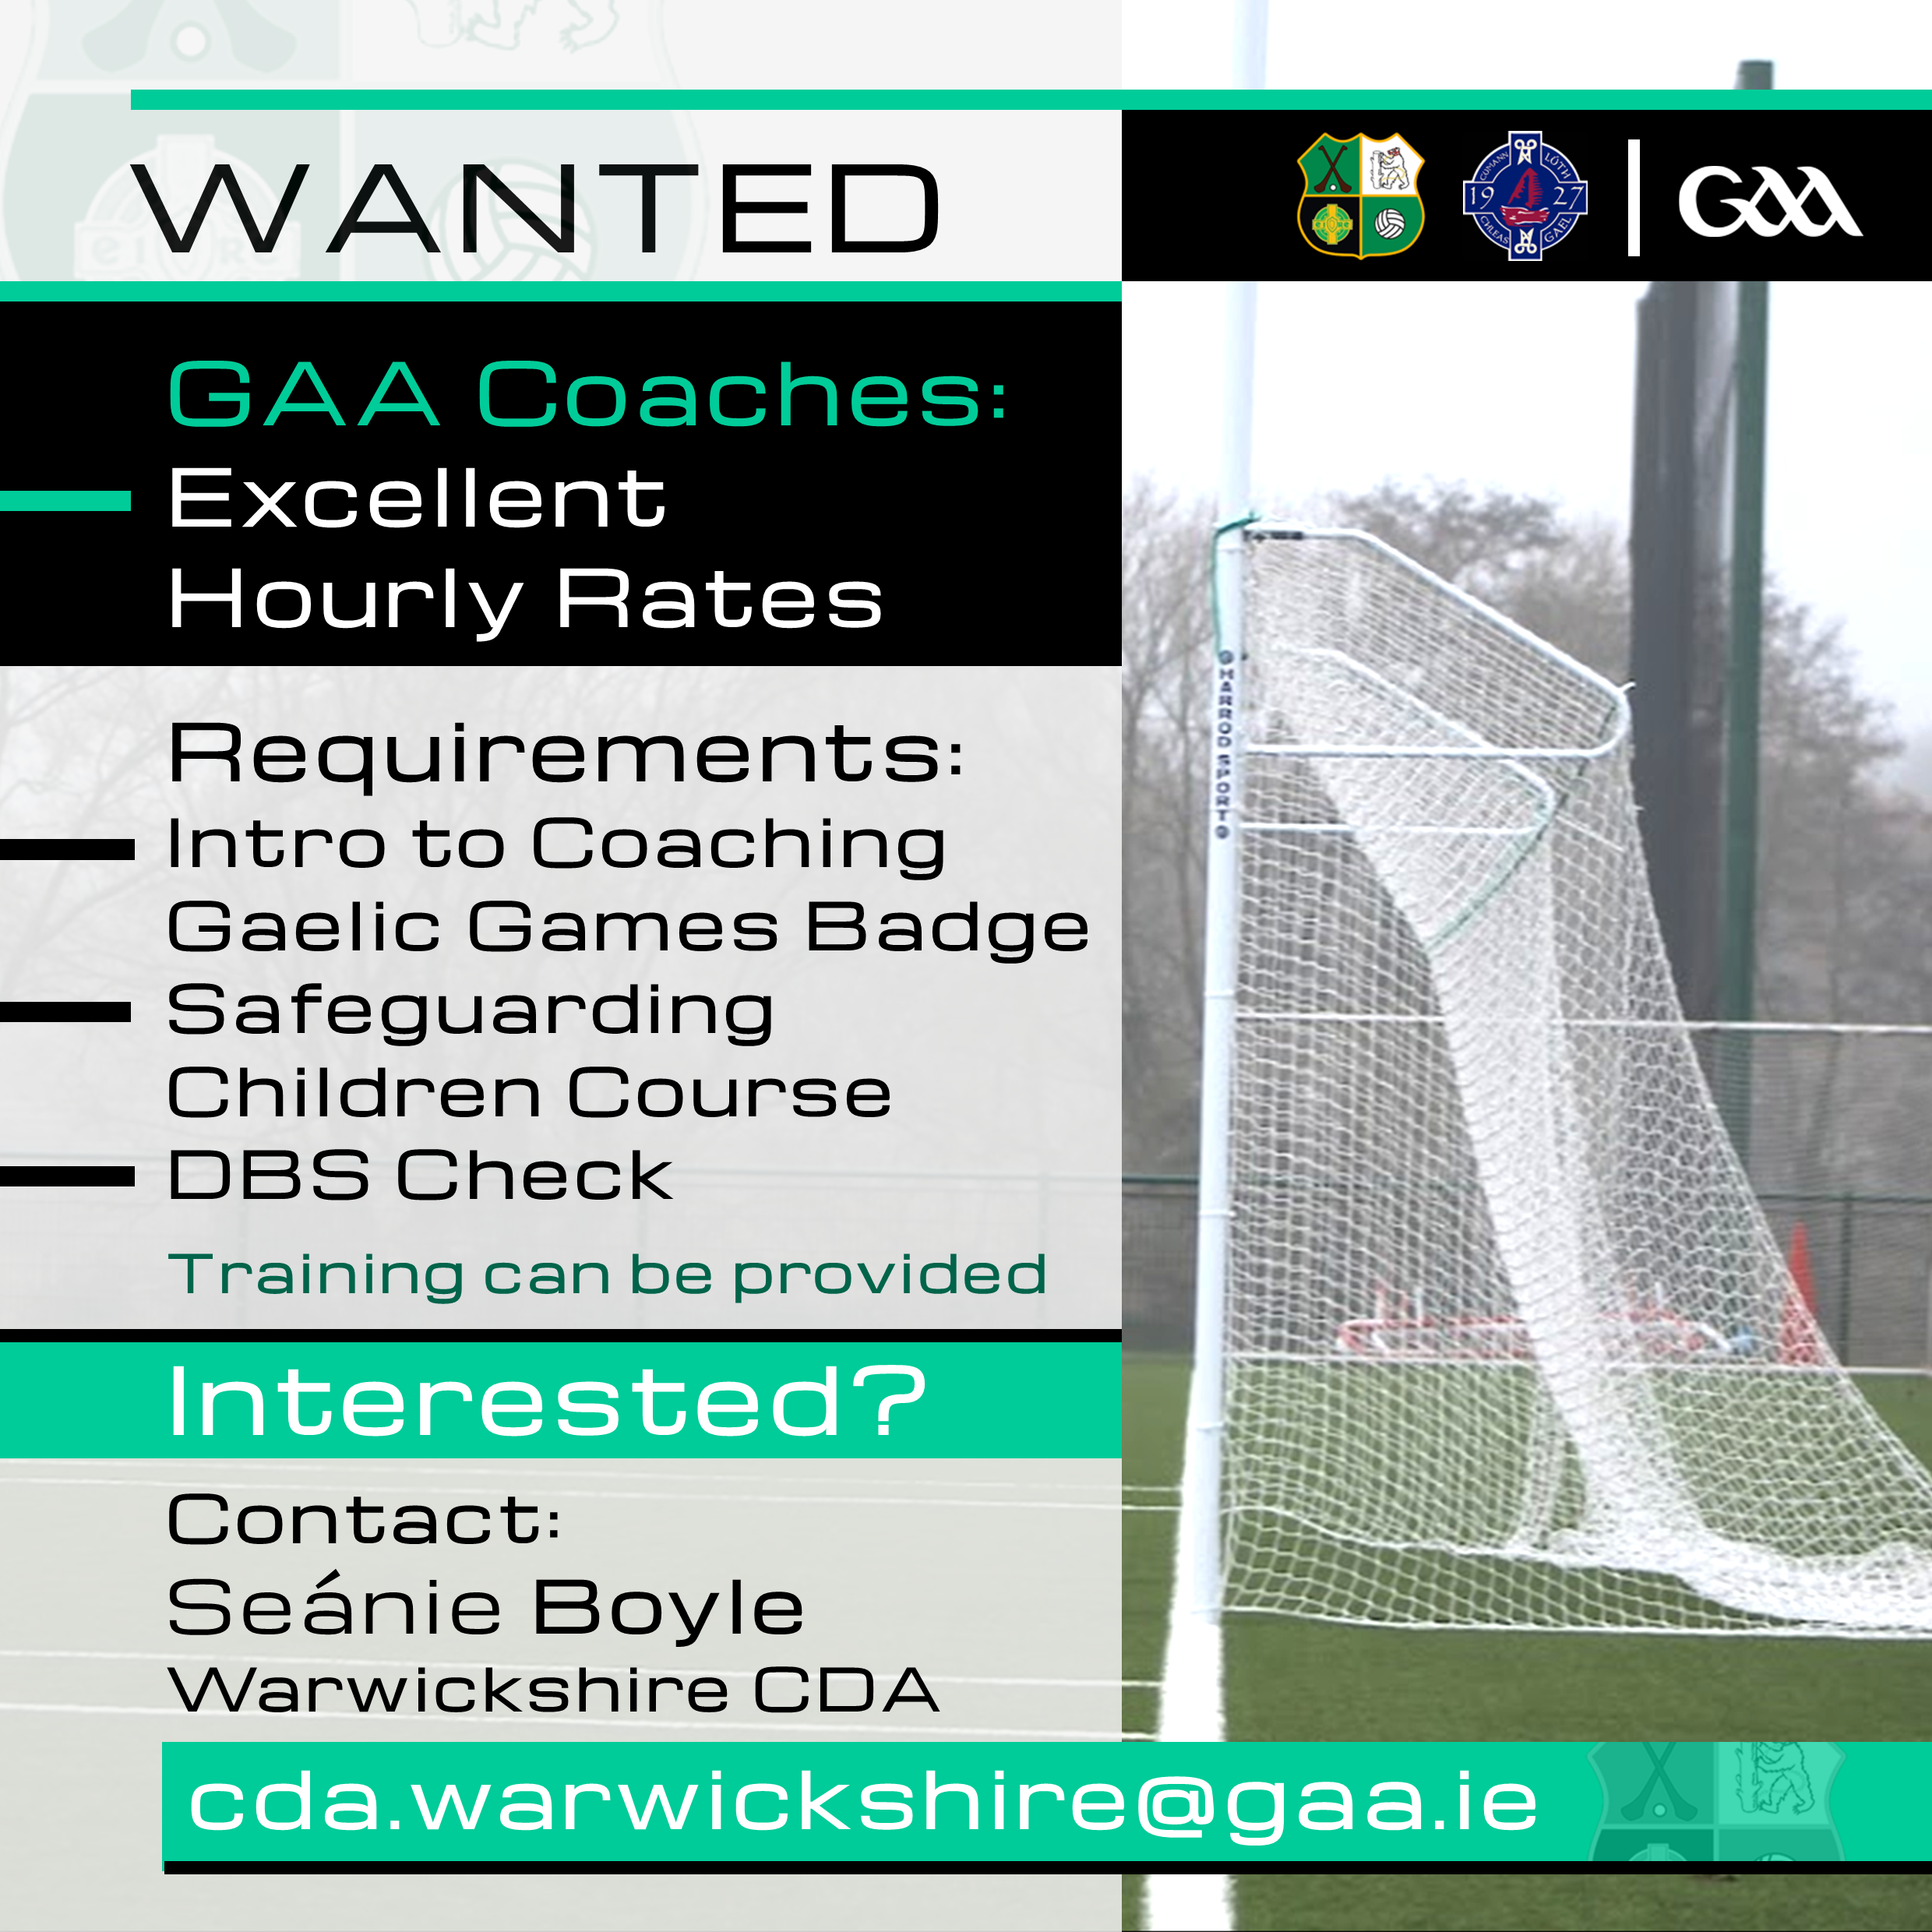 We are recruiting: GAA Coaches